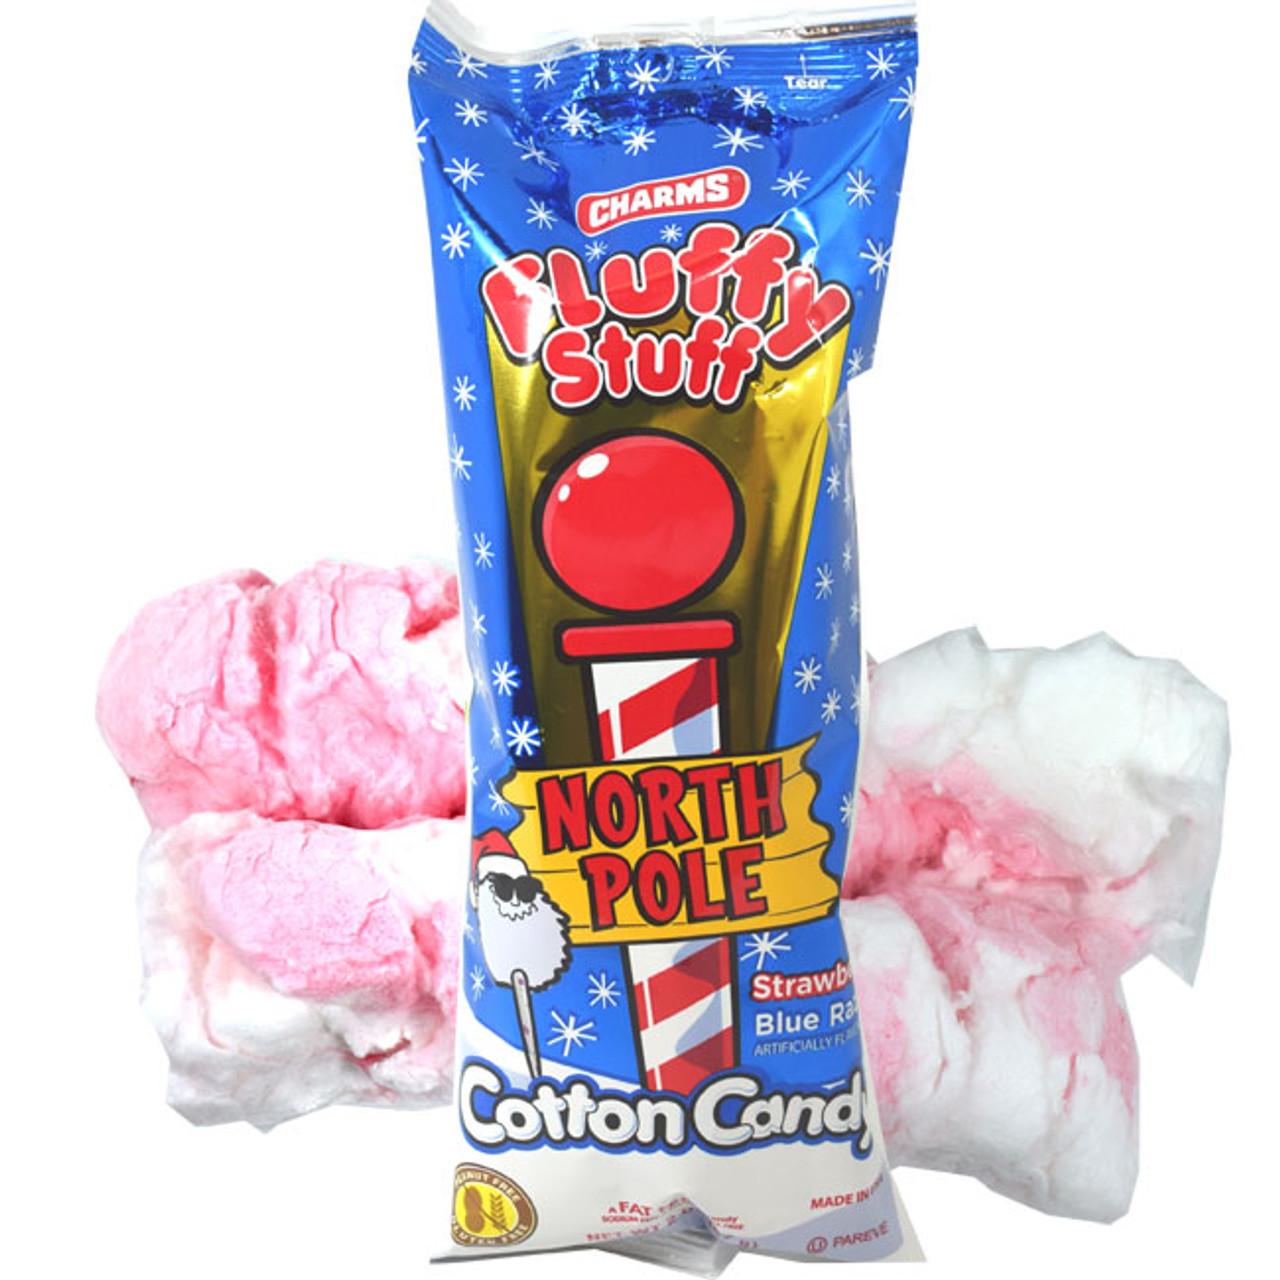 Charms fluffy stuff cotton candy 2.5oz single